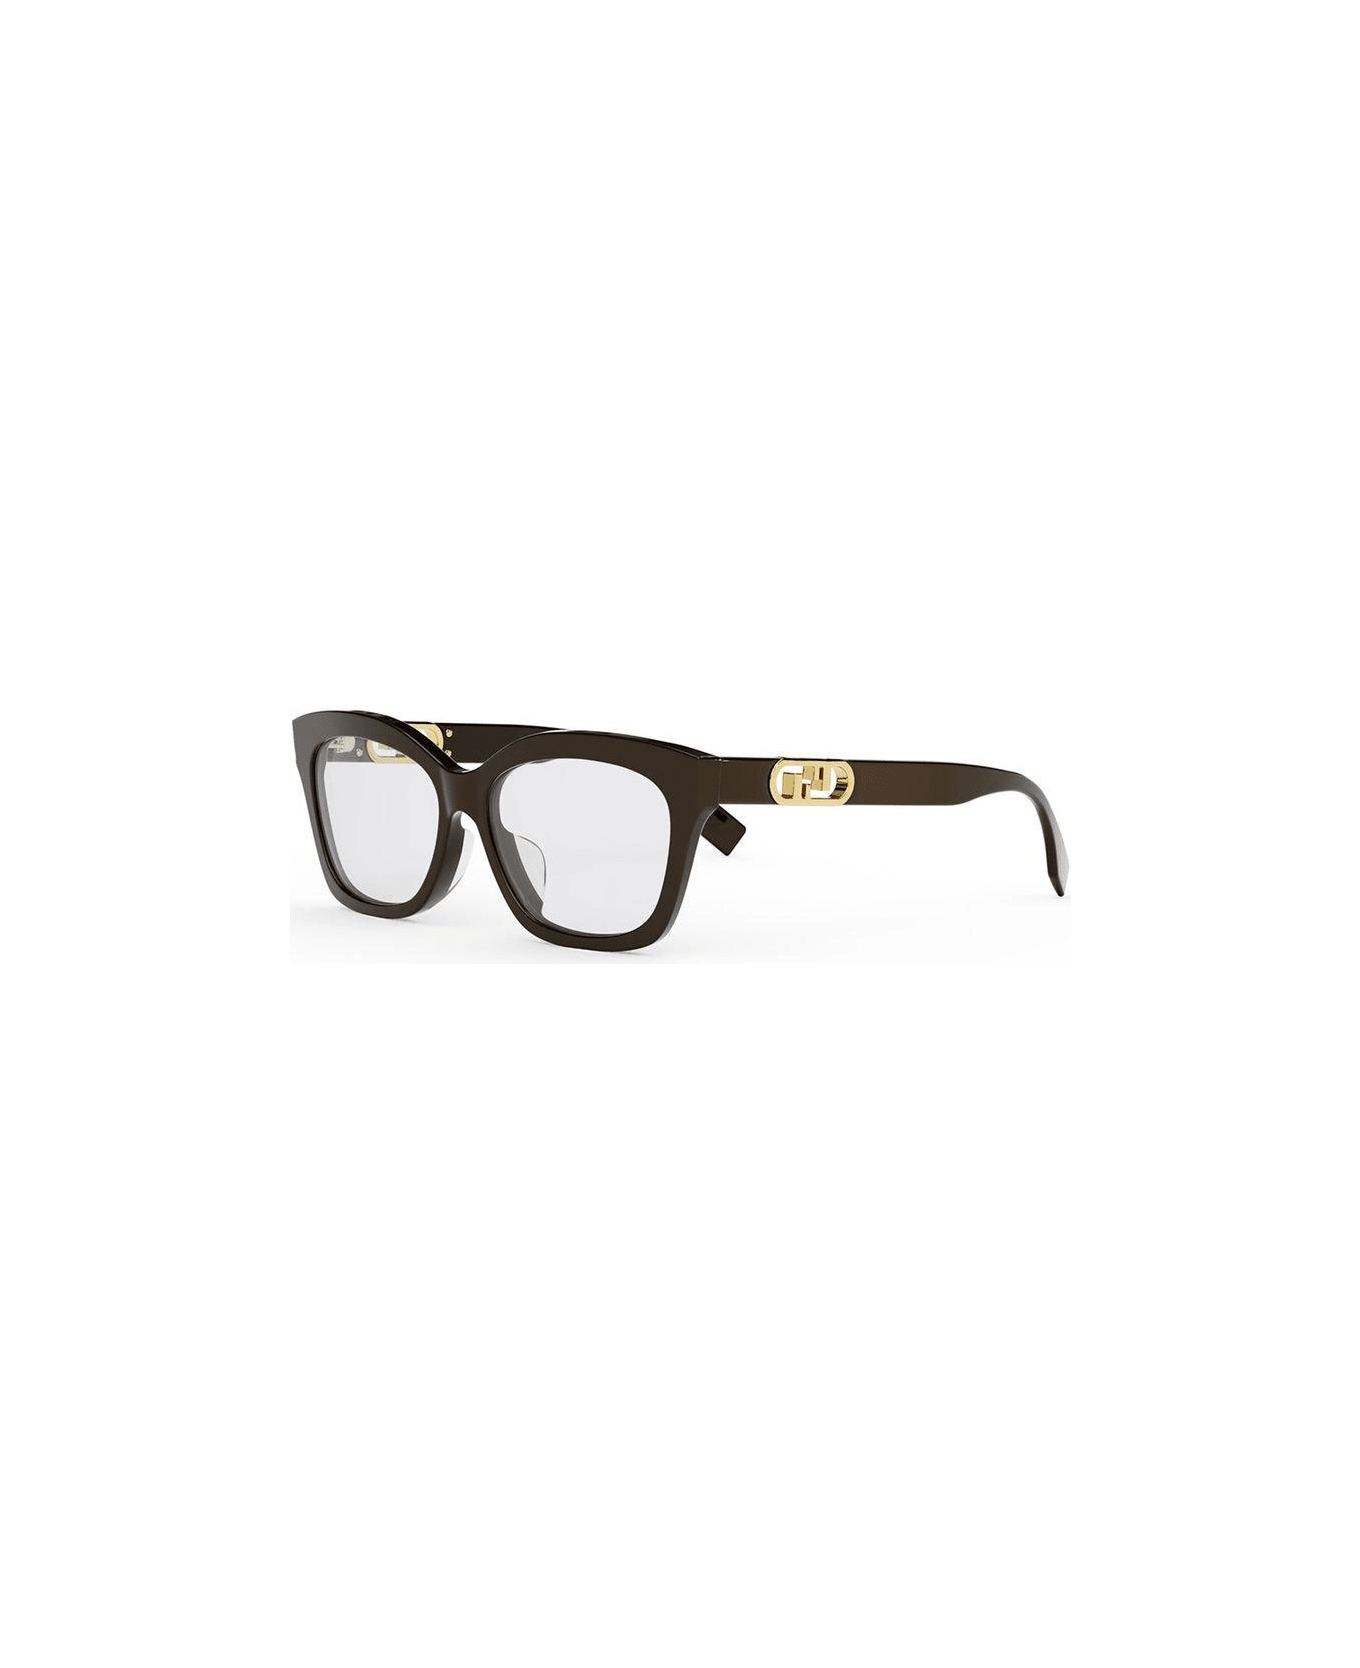 Fendi Eyewear Oval Frame Glasses - 050